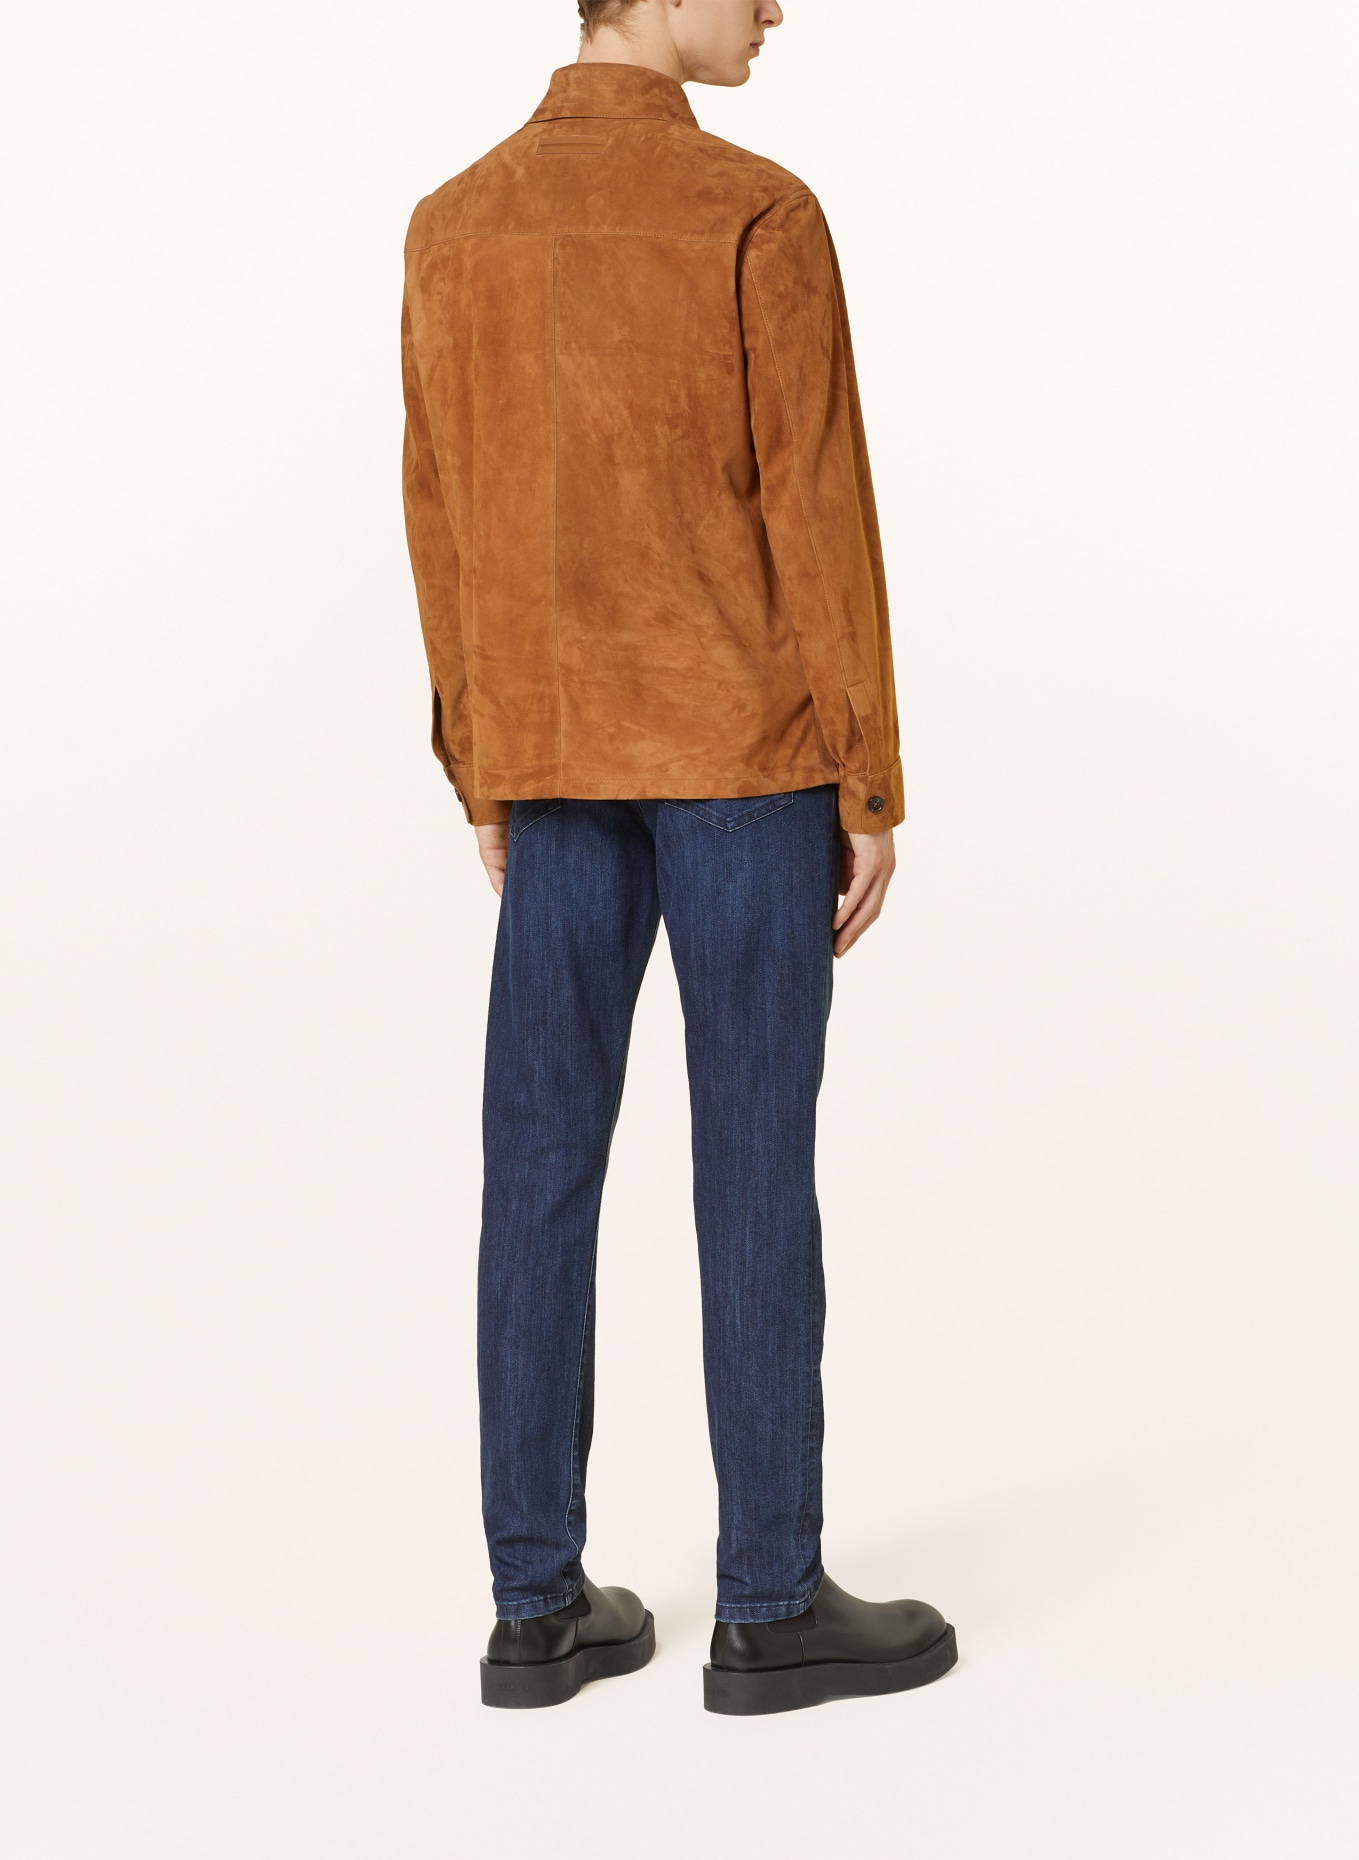 ZEGNA Leather overshirt, Color: COGNAC (Image 3)